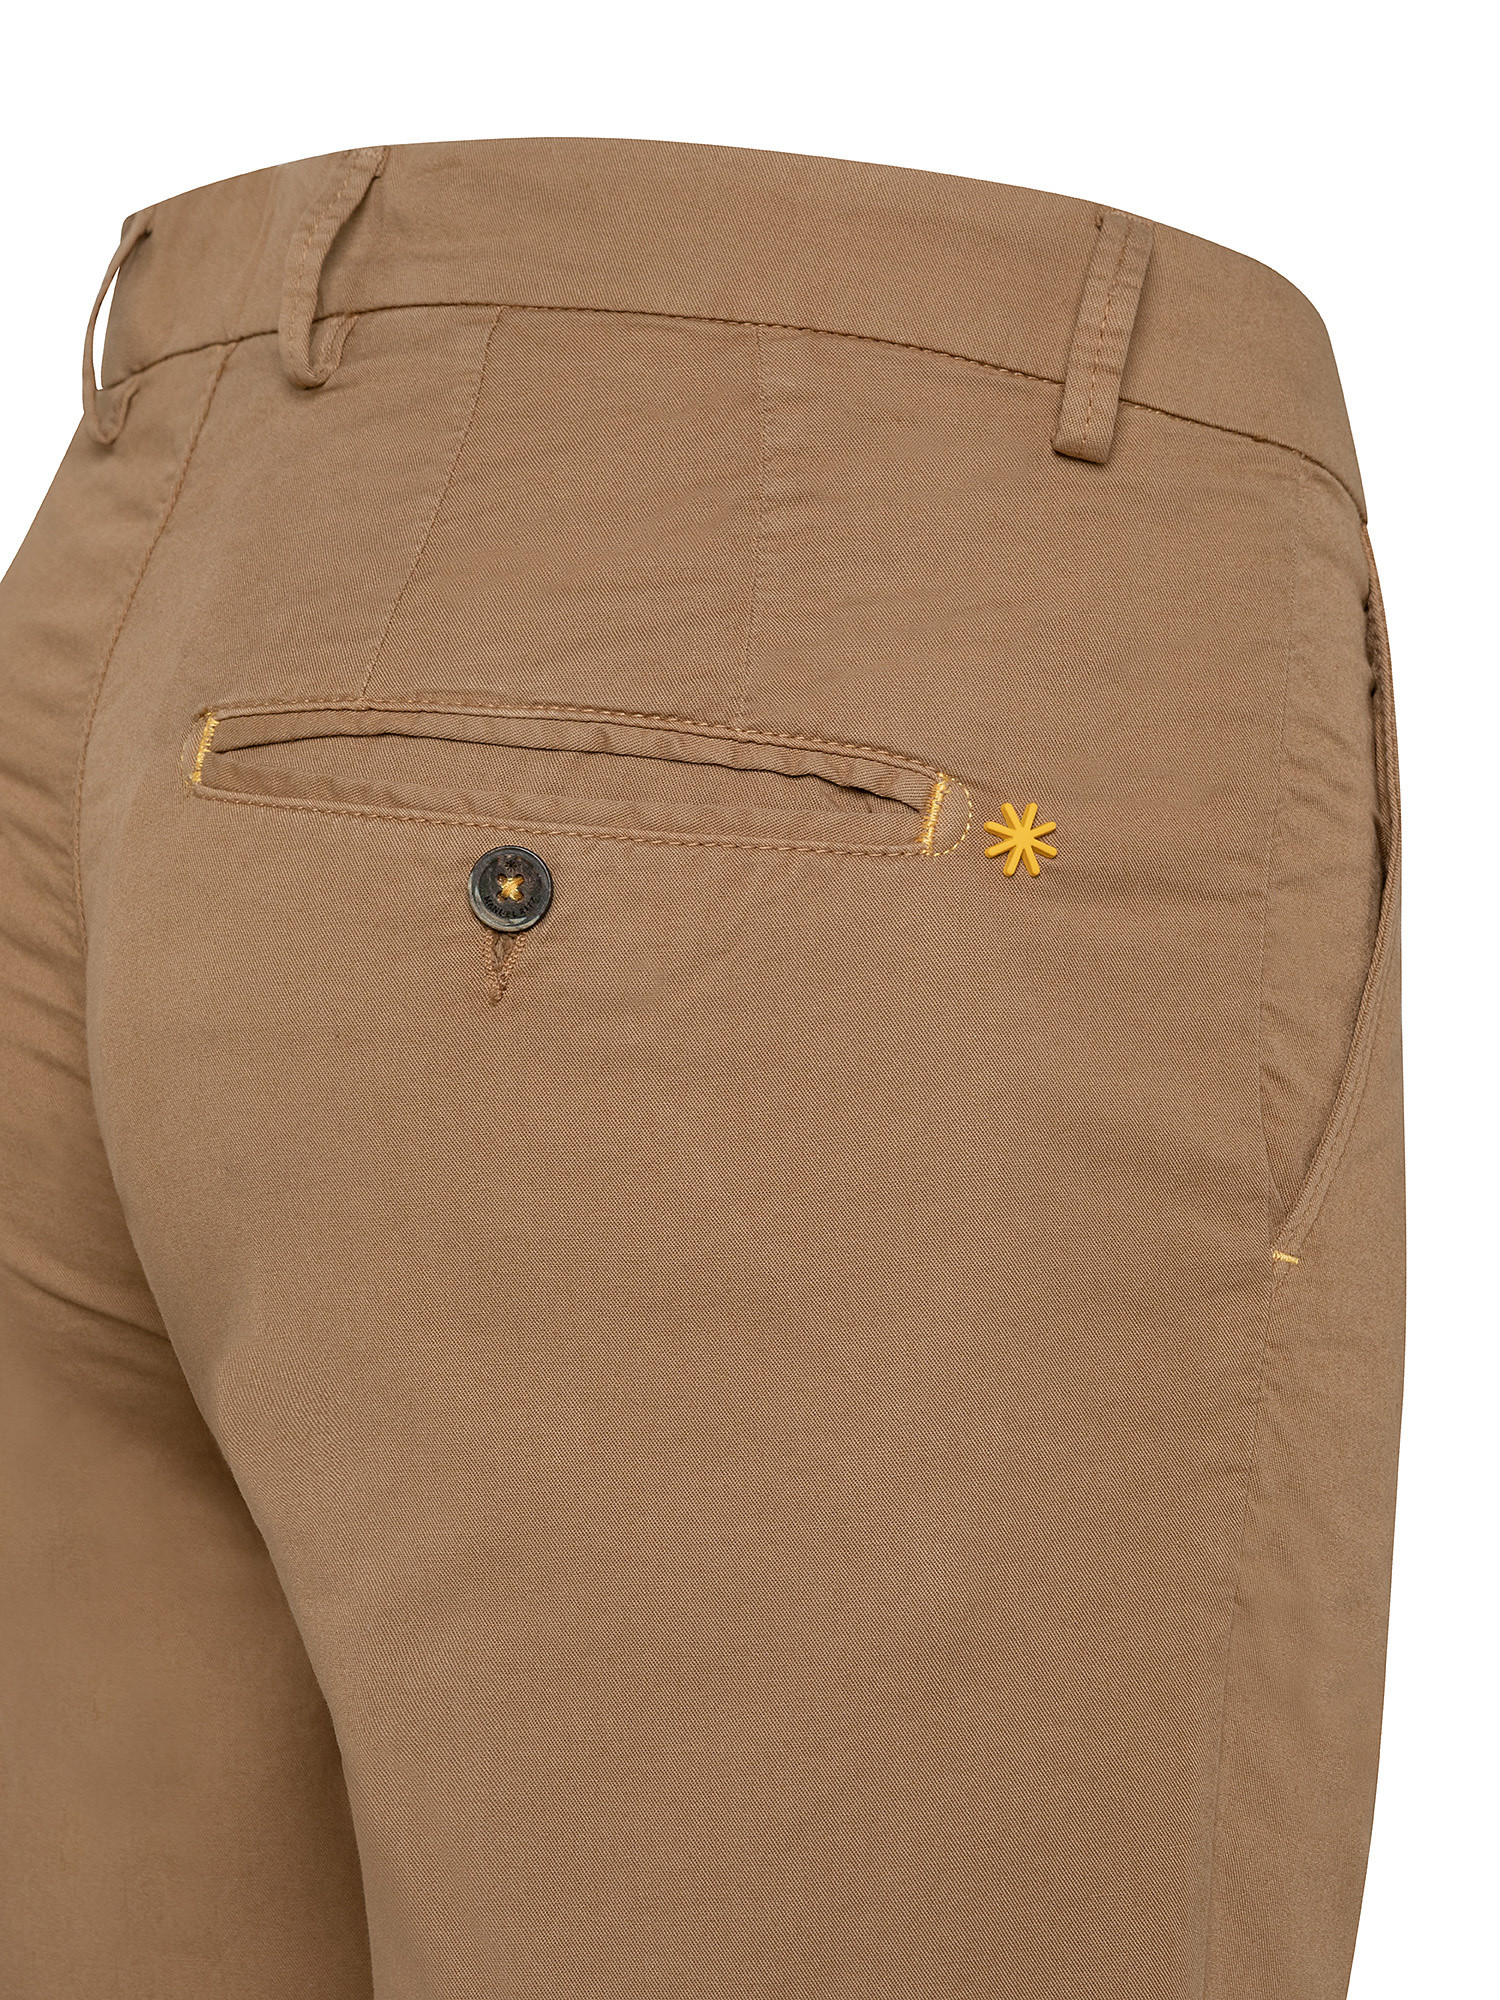 Slim fit dyed cotton bermuda shorts, Light Brown, large image number 2